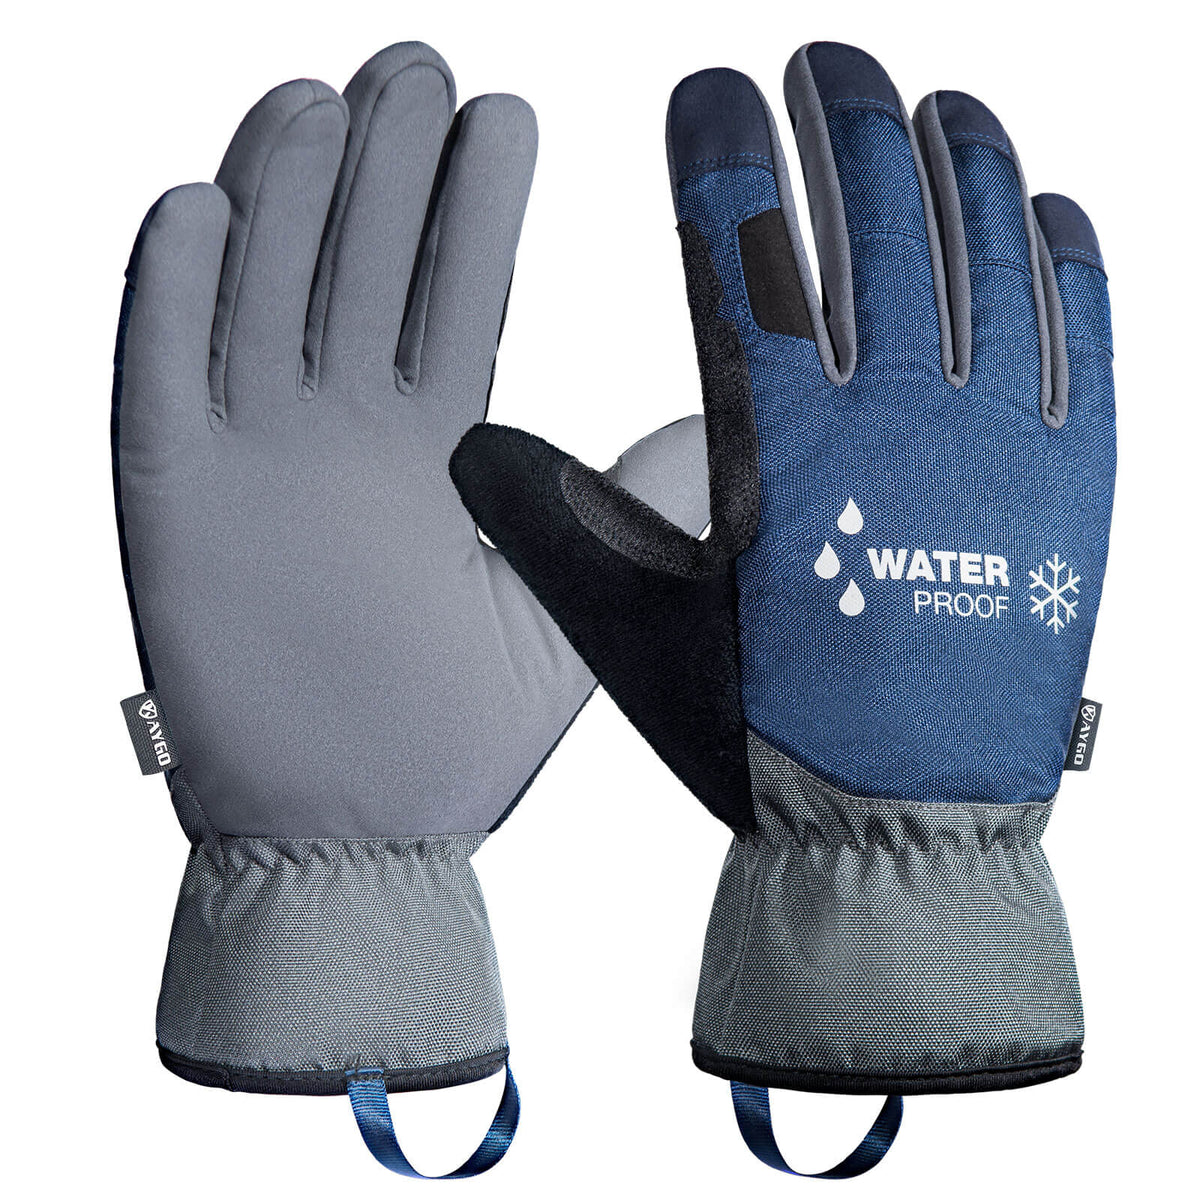 Mechanic Work Gloves-KAYGO KG125L,Black,Heavy duty,Improved dexterity -  Large 